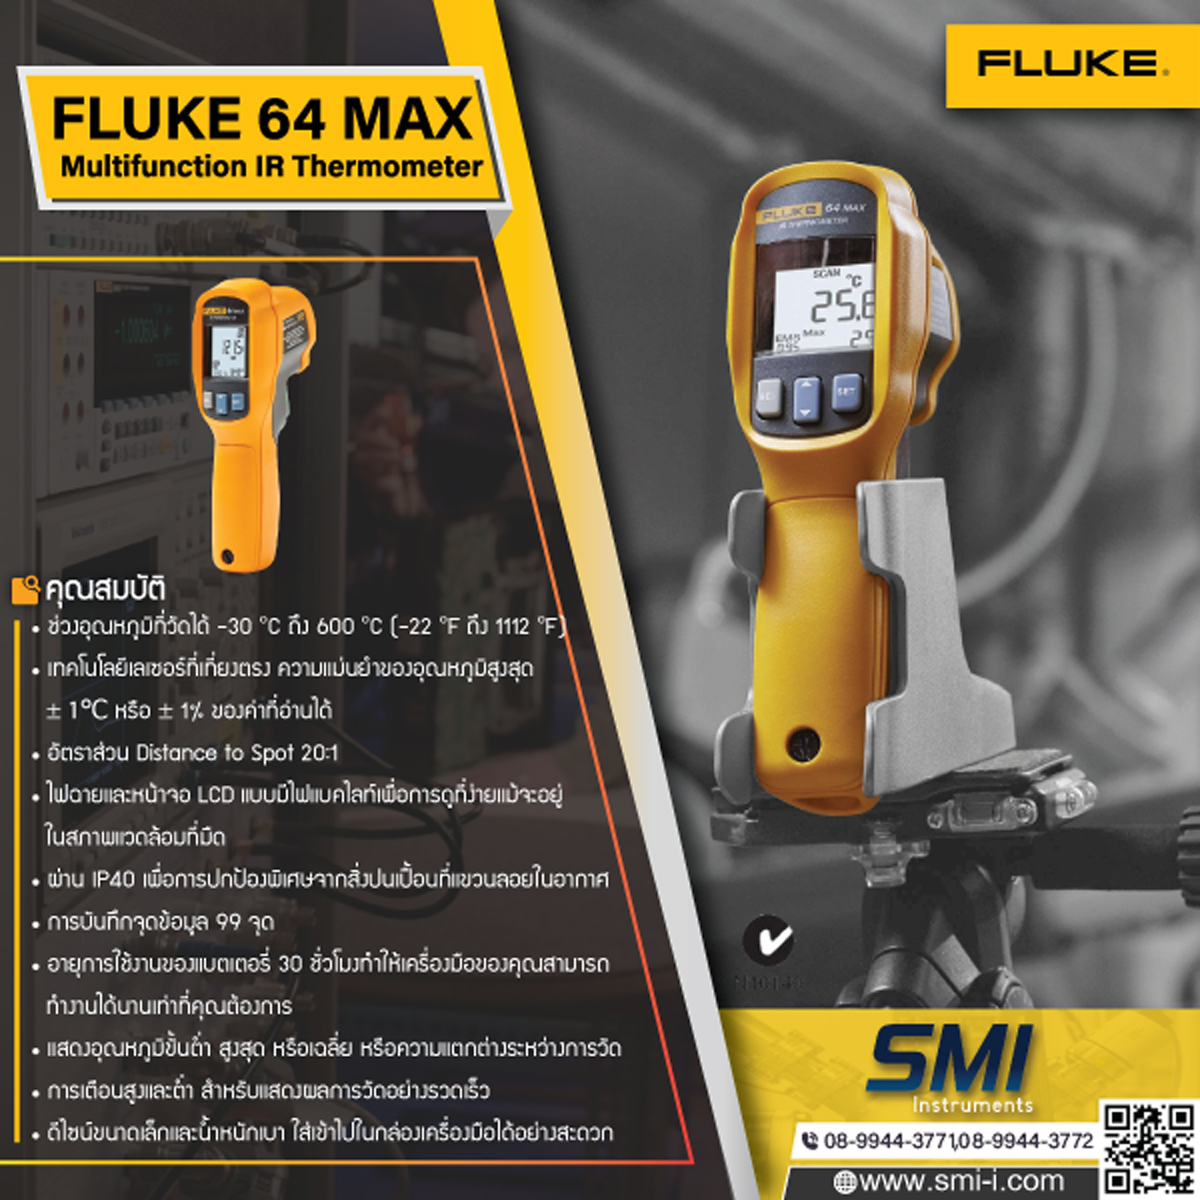 SMI info FLUKE 64 Max IR Thermometer (-30 C to 600 C)